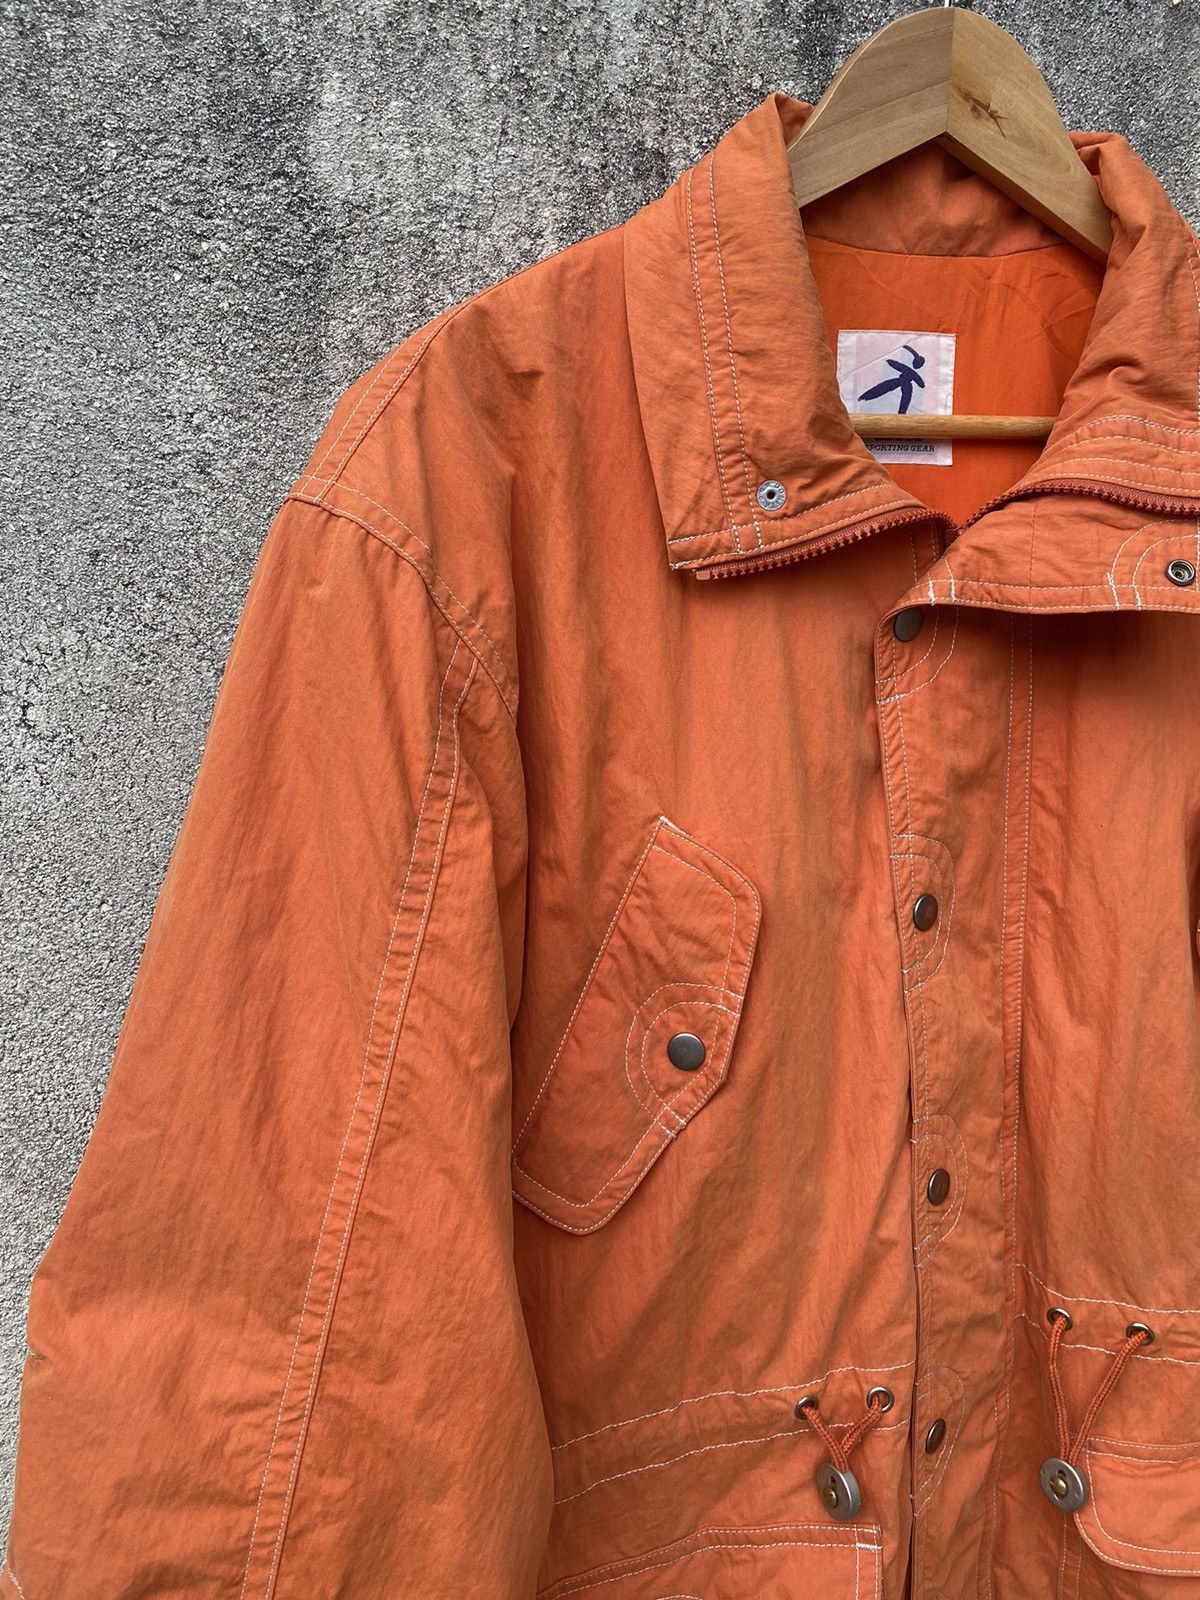 Issey Miyake - Vintage Hai Sporting Gear Parka Jacket Orange Colour - 6